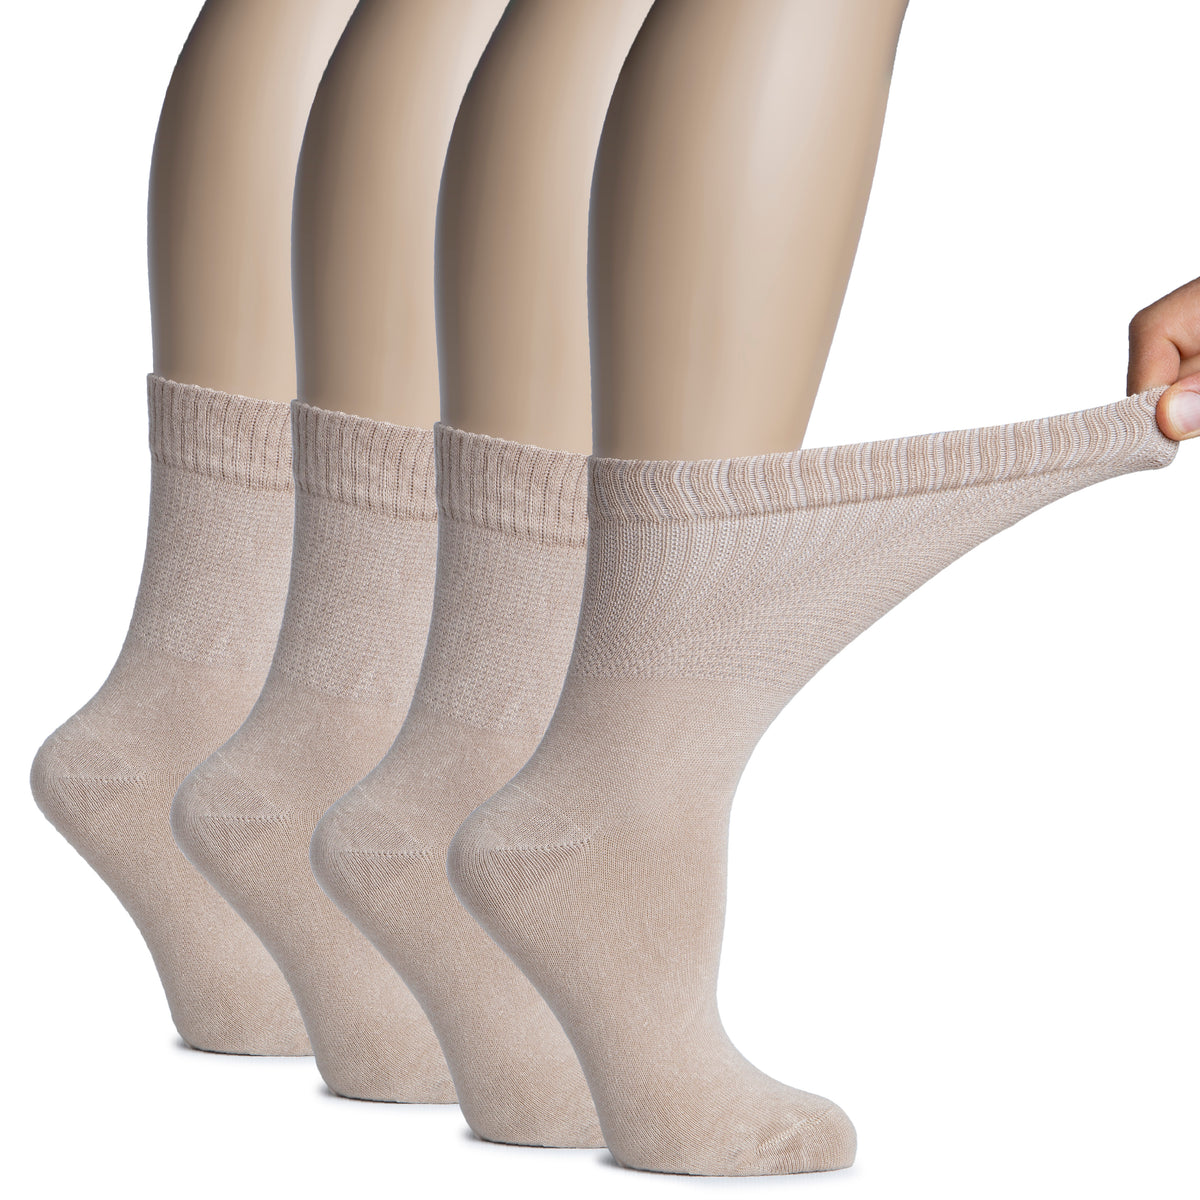 Hugh Ugoli Women's Bamboo Diabetic Crew Thin Socks With Seamless Toe, Soft Socks For Pregnant Women & Elderly People, 4 Pairs | Shoe Size: 6-9 | Gray